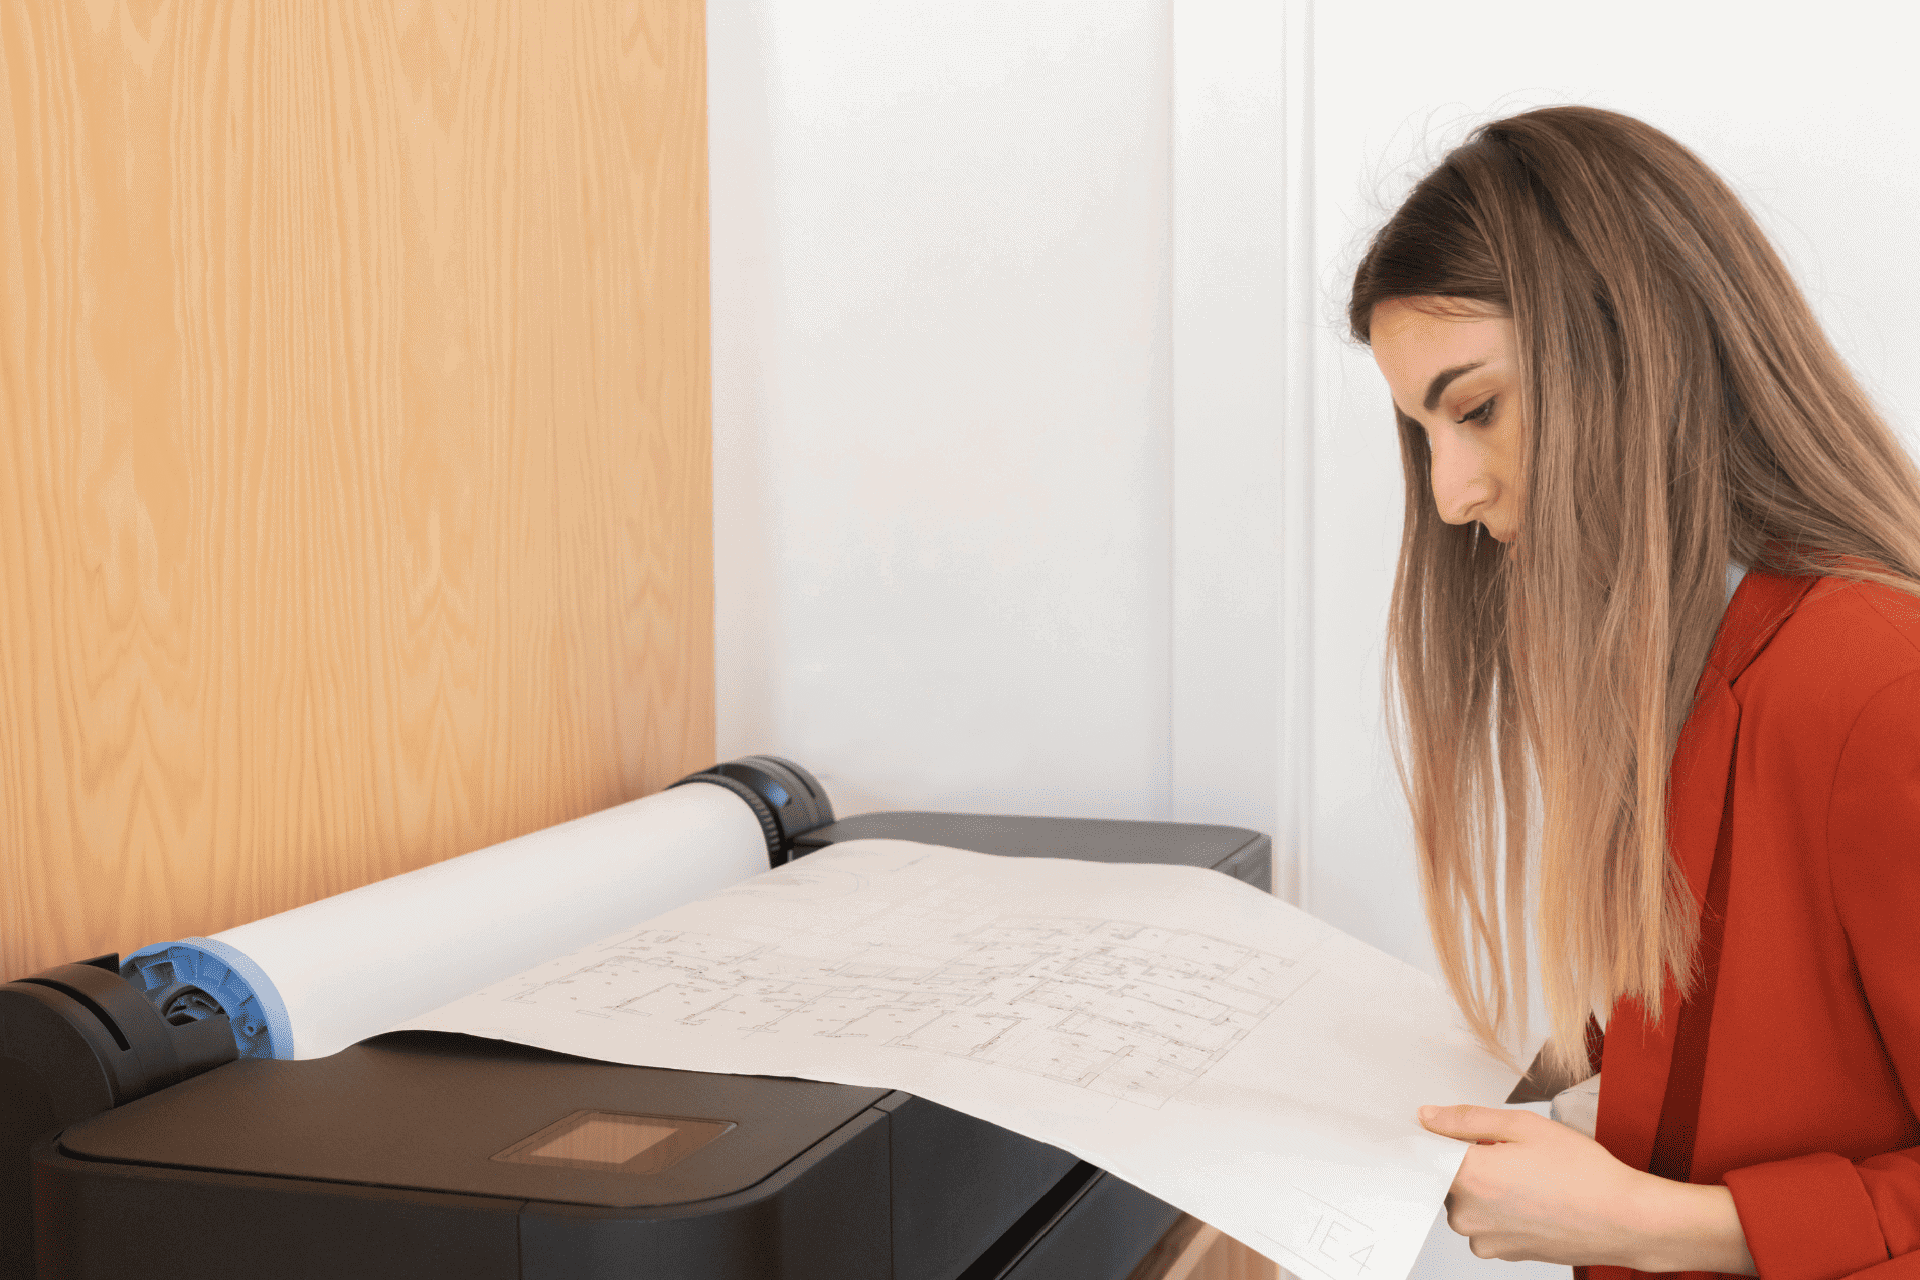 A woman uses a production printer to print blueprints